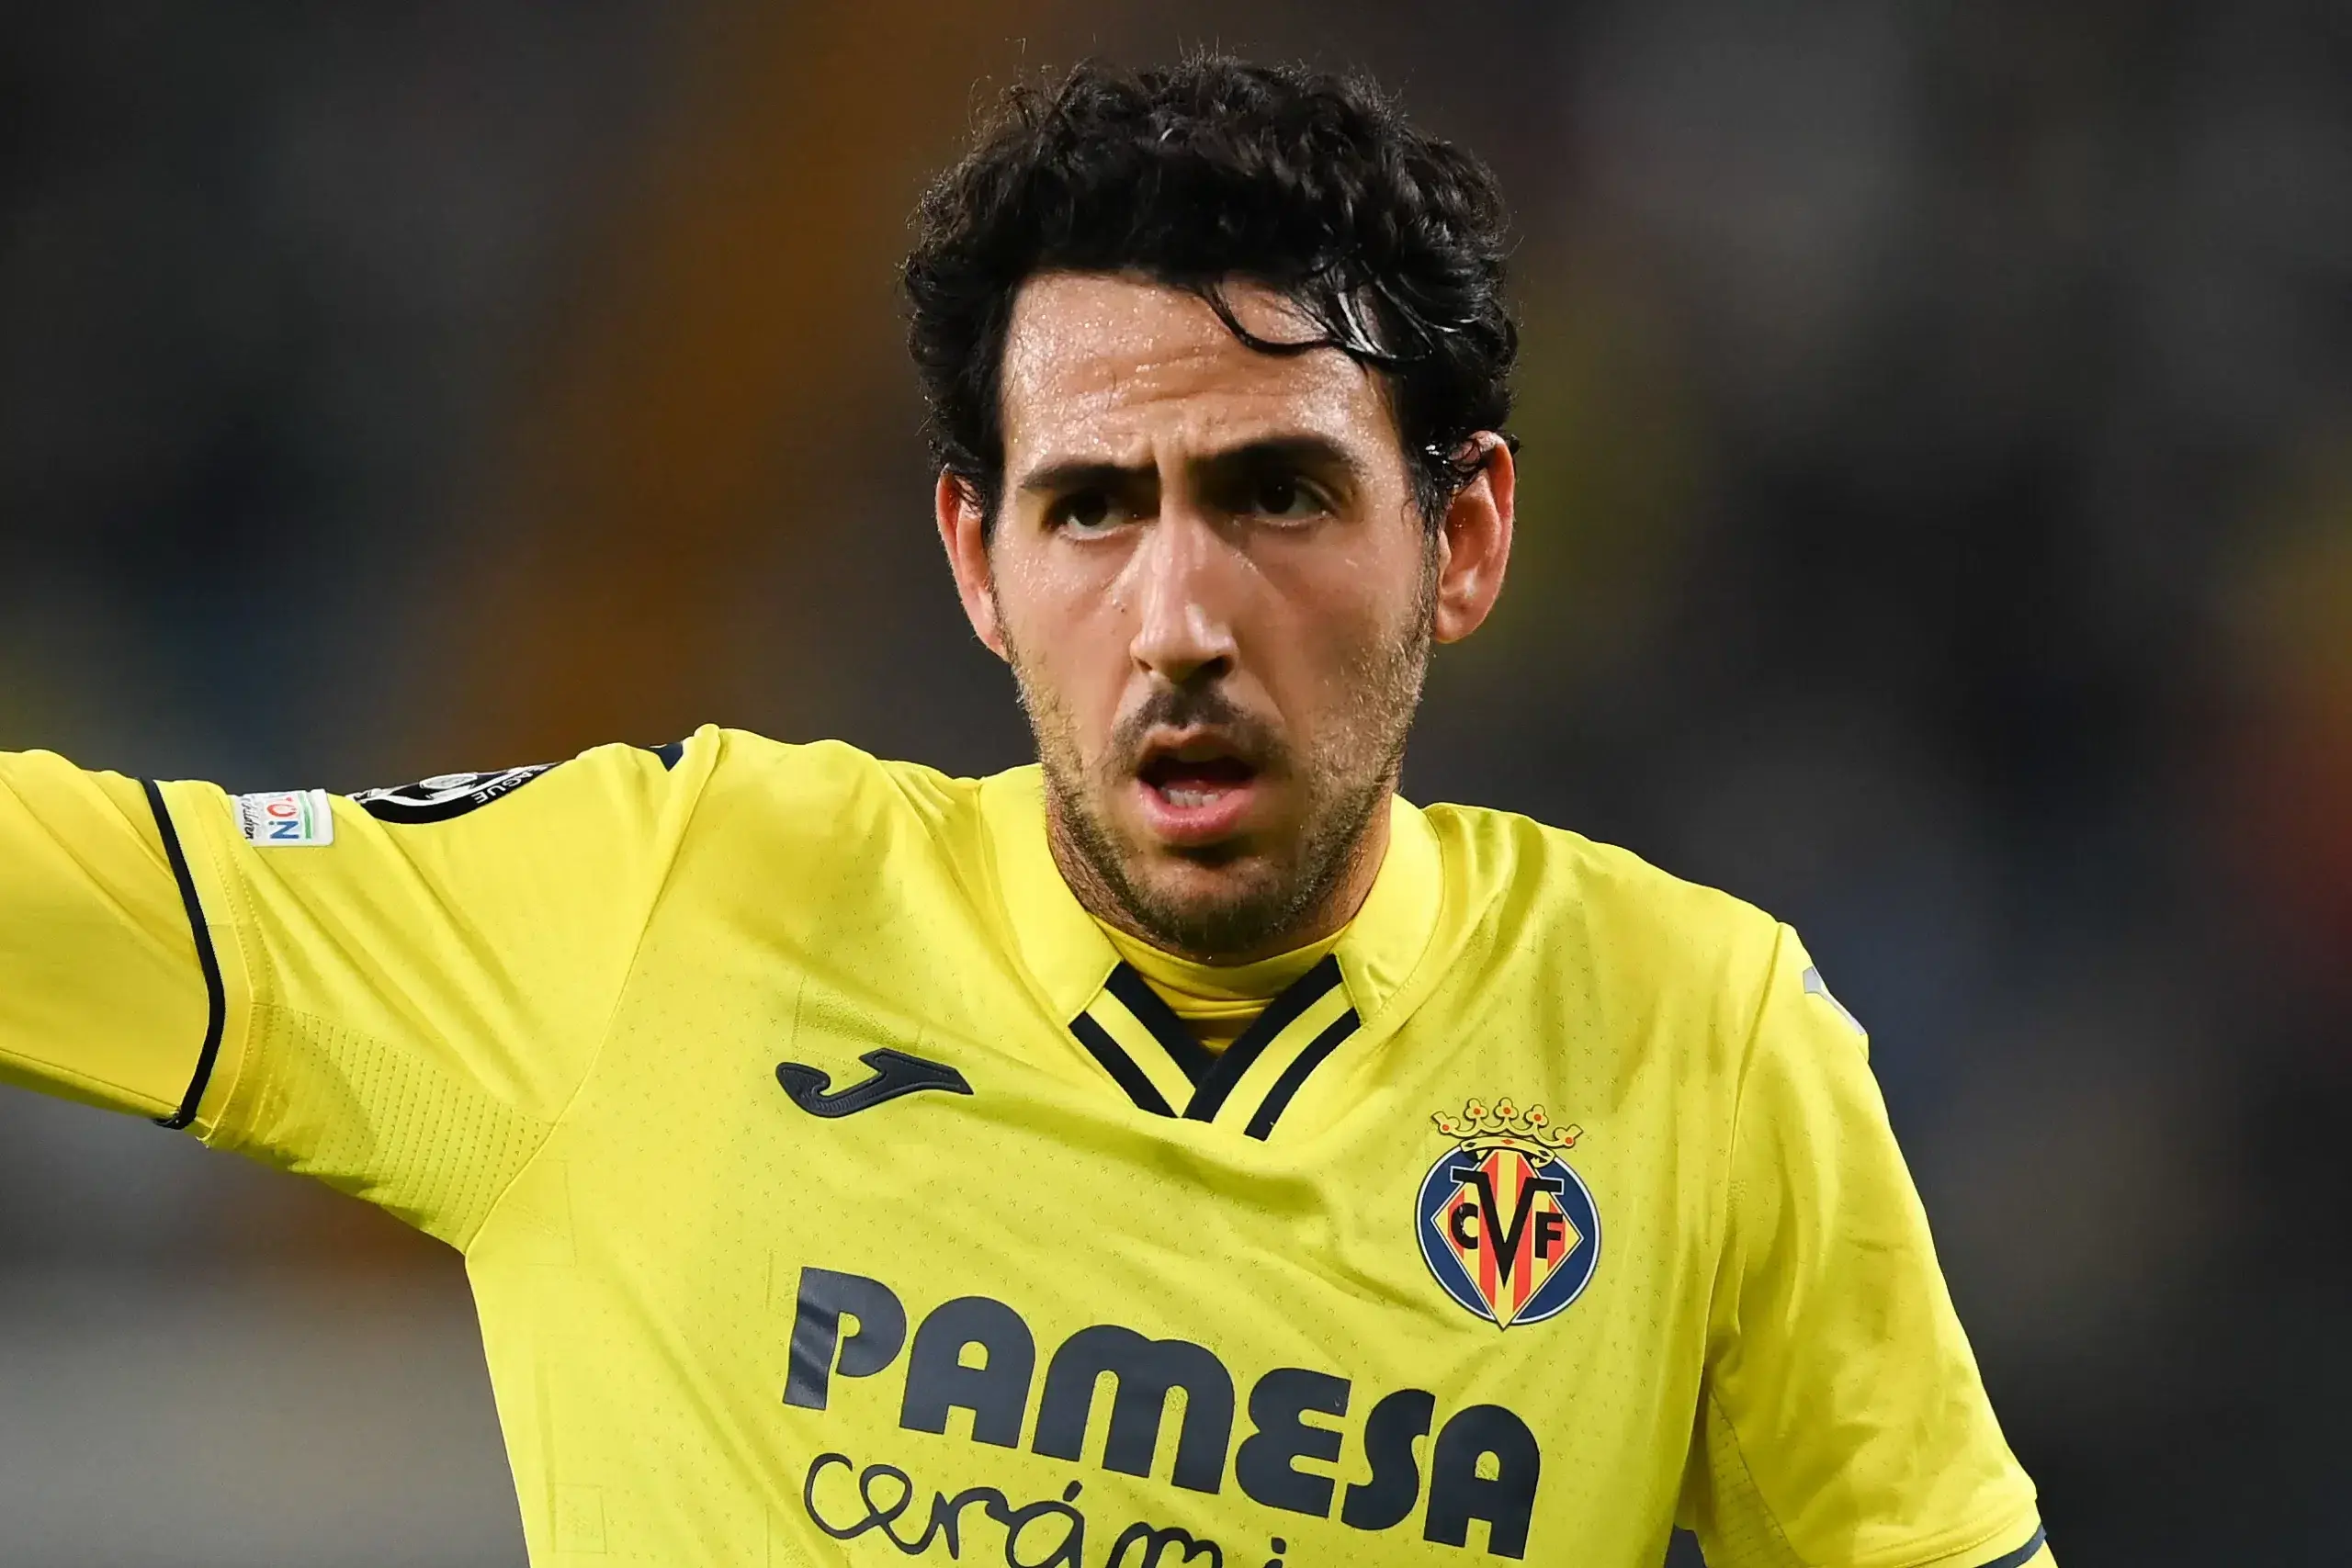 Villarreal CF's exemplary response to Aston Villa's offensive for Parejo
	
